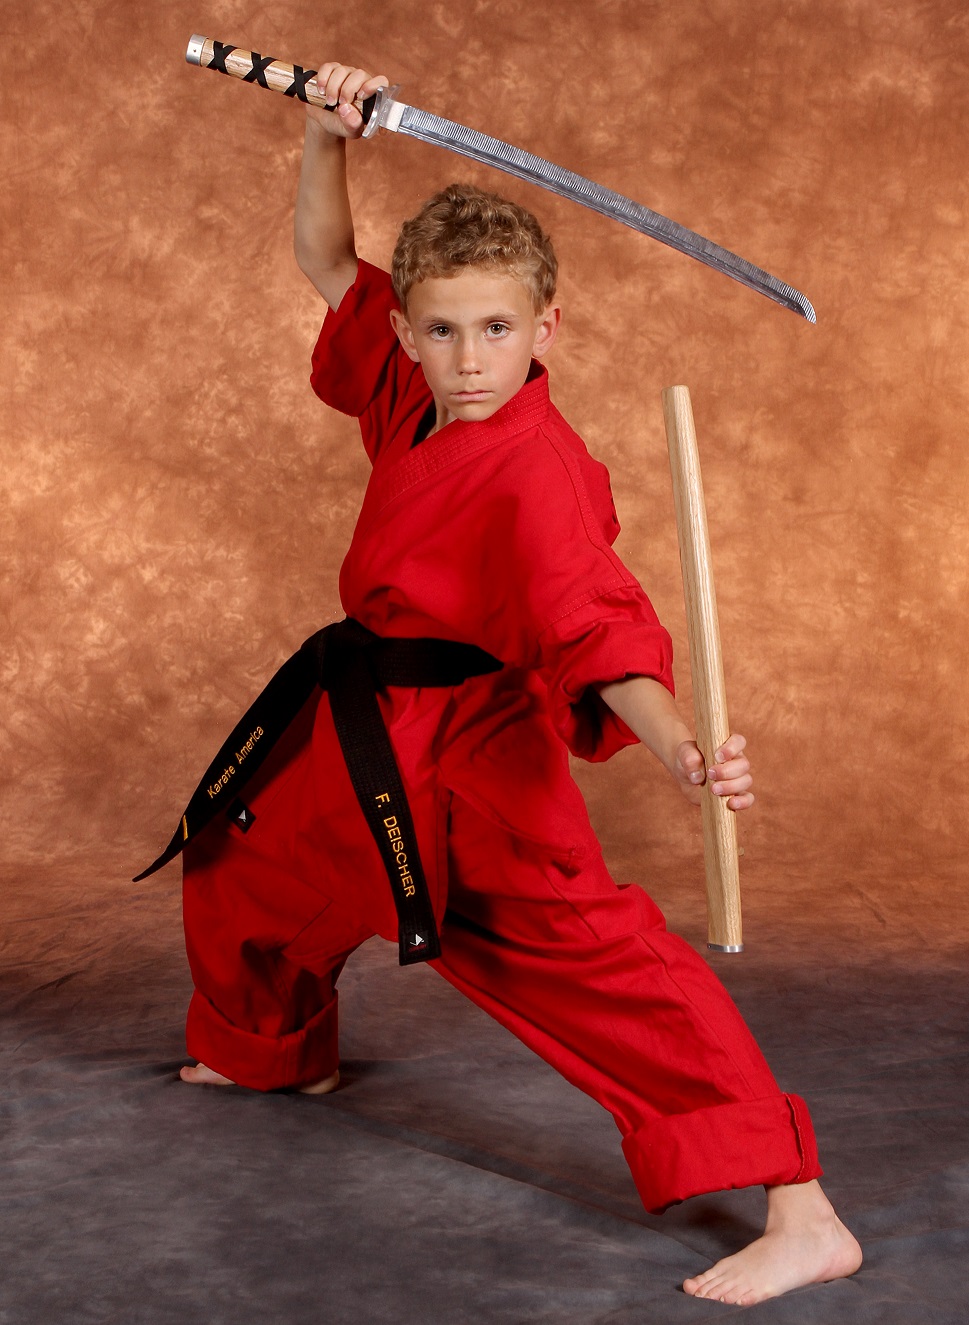 Confident Karate Kid!